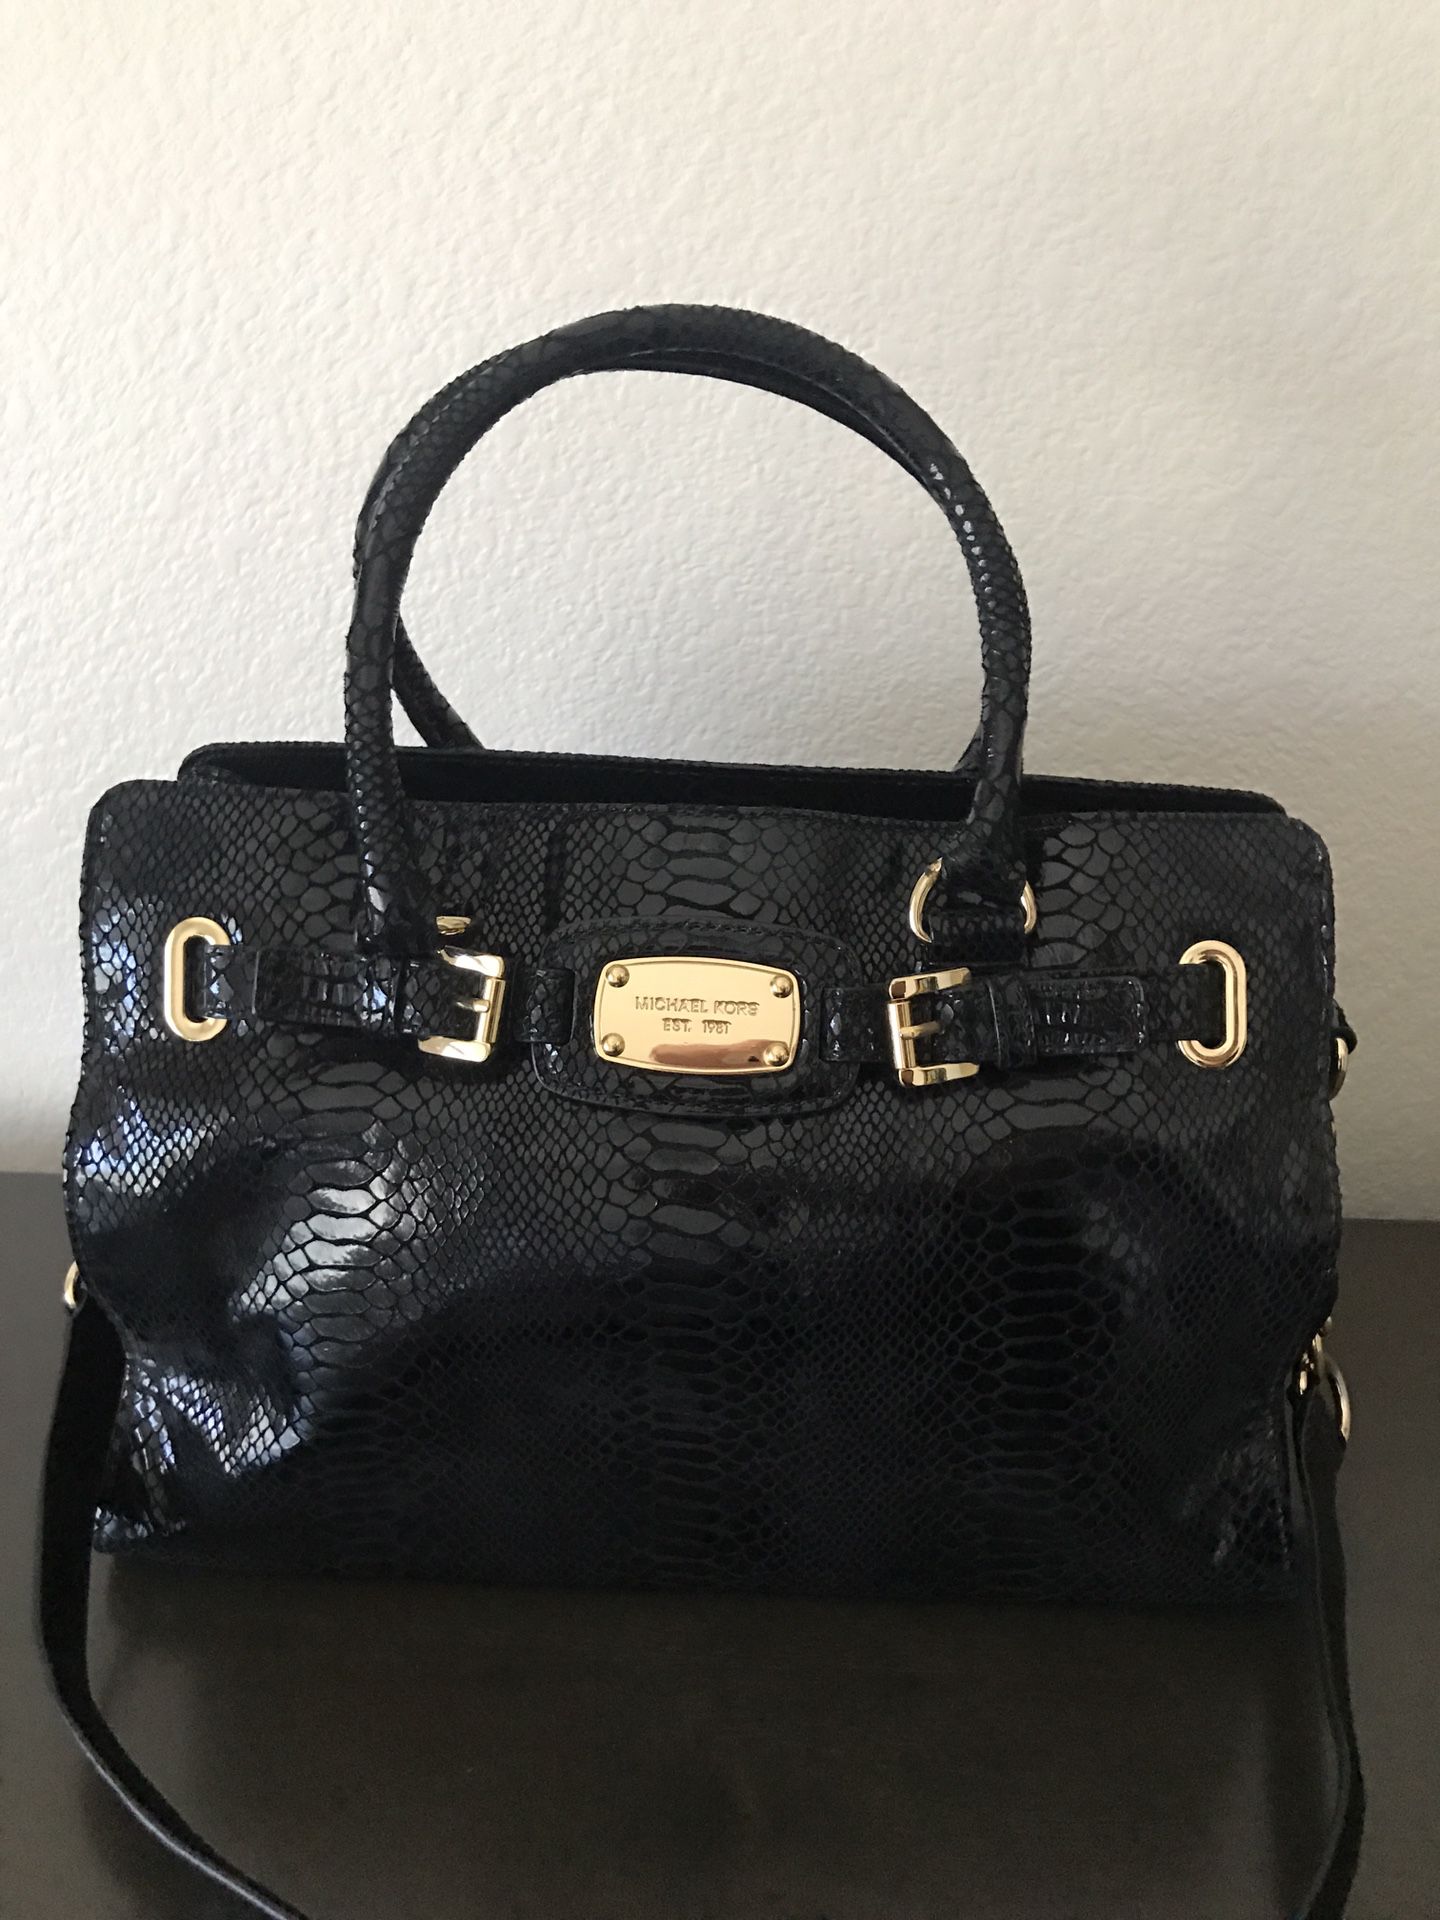 Michael Kors Large Hamilton Python Embossed Snakeskin Leather Tote Satchel  Bag for Sale in Las Vegas, NV - OfferUp